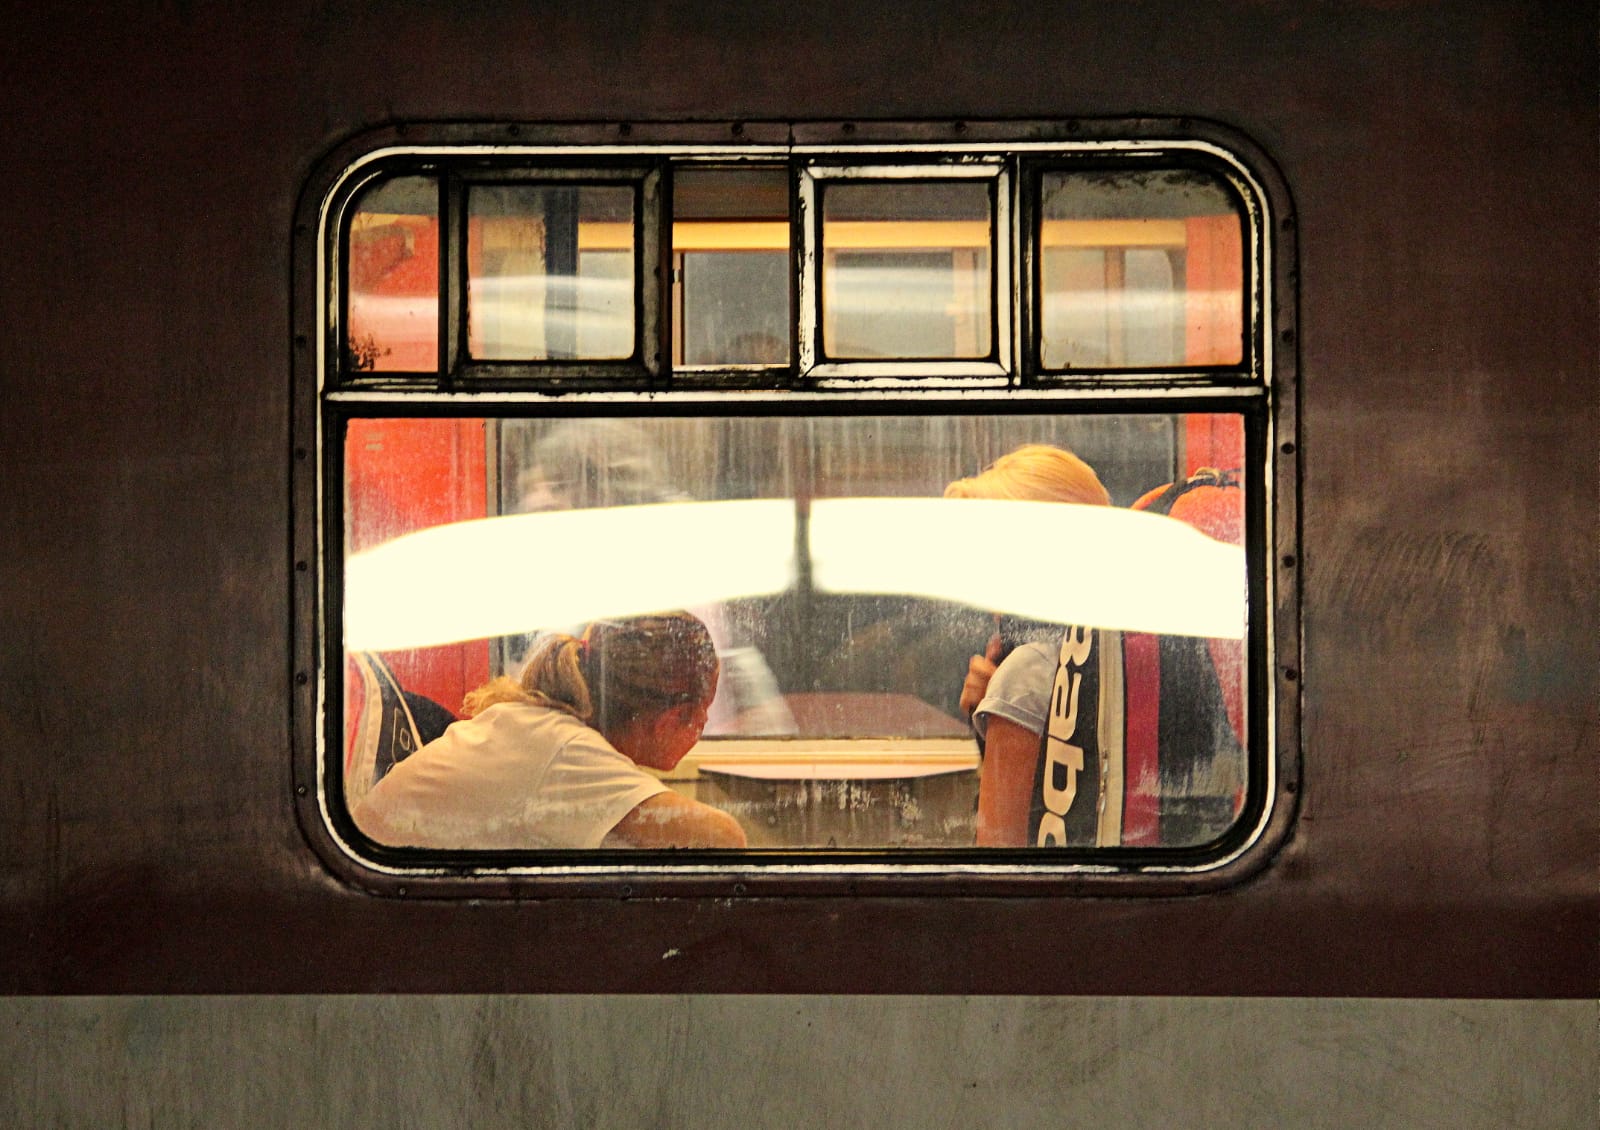 trein train zug fahrzeug coupé treinraam trainwindow wondow fenetre finestra treni oud old vieille alto alt vieux 